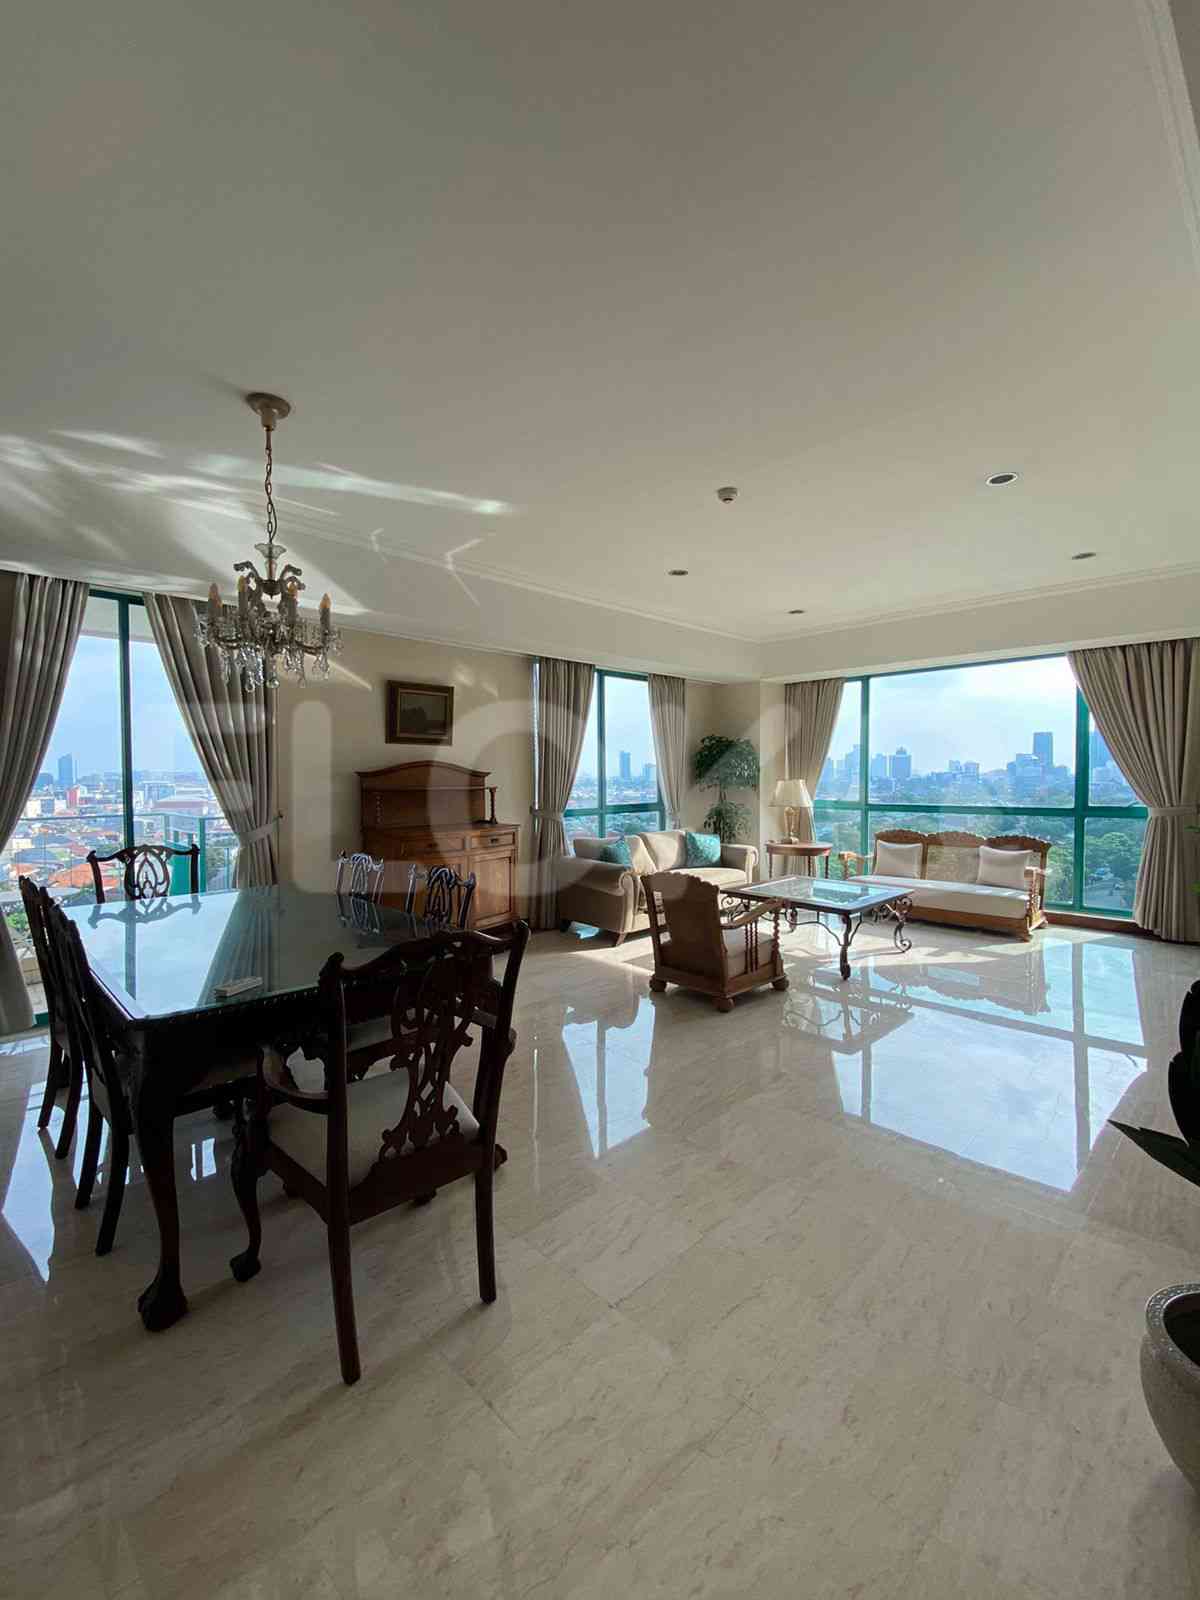 3 Bedroom on 10th Floor for Rent in Casablanca Apartment - fte130 7